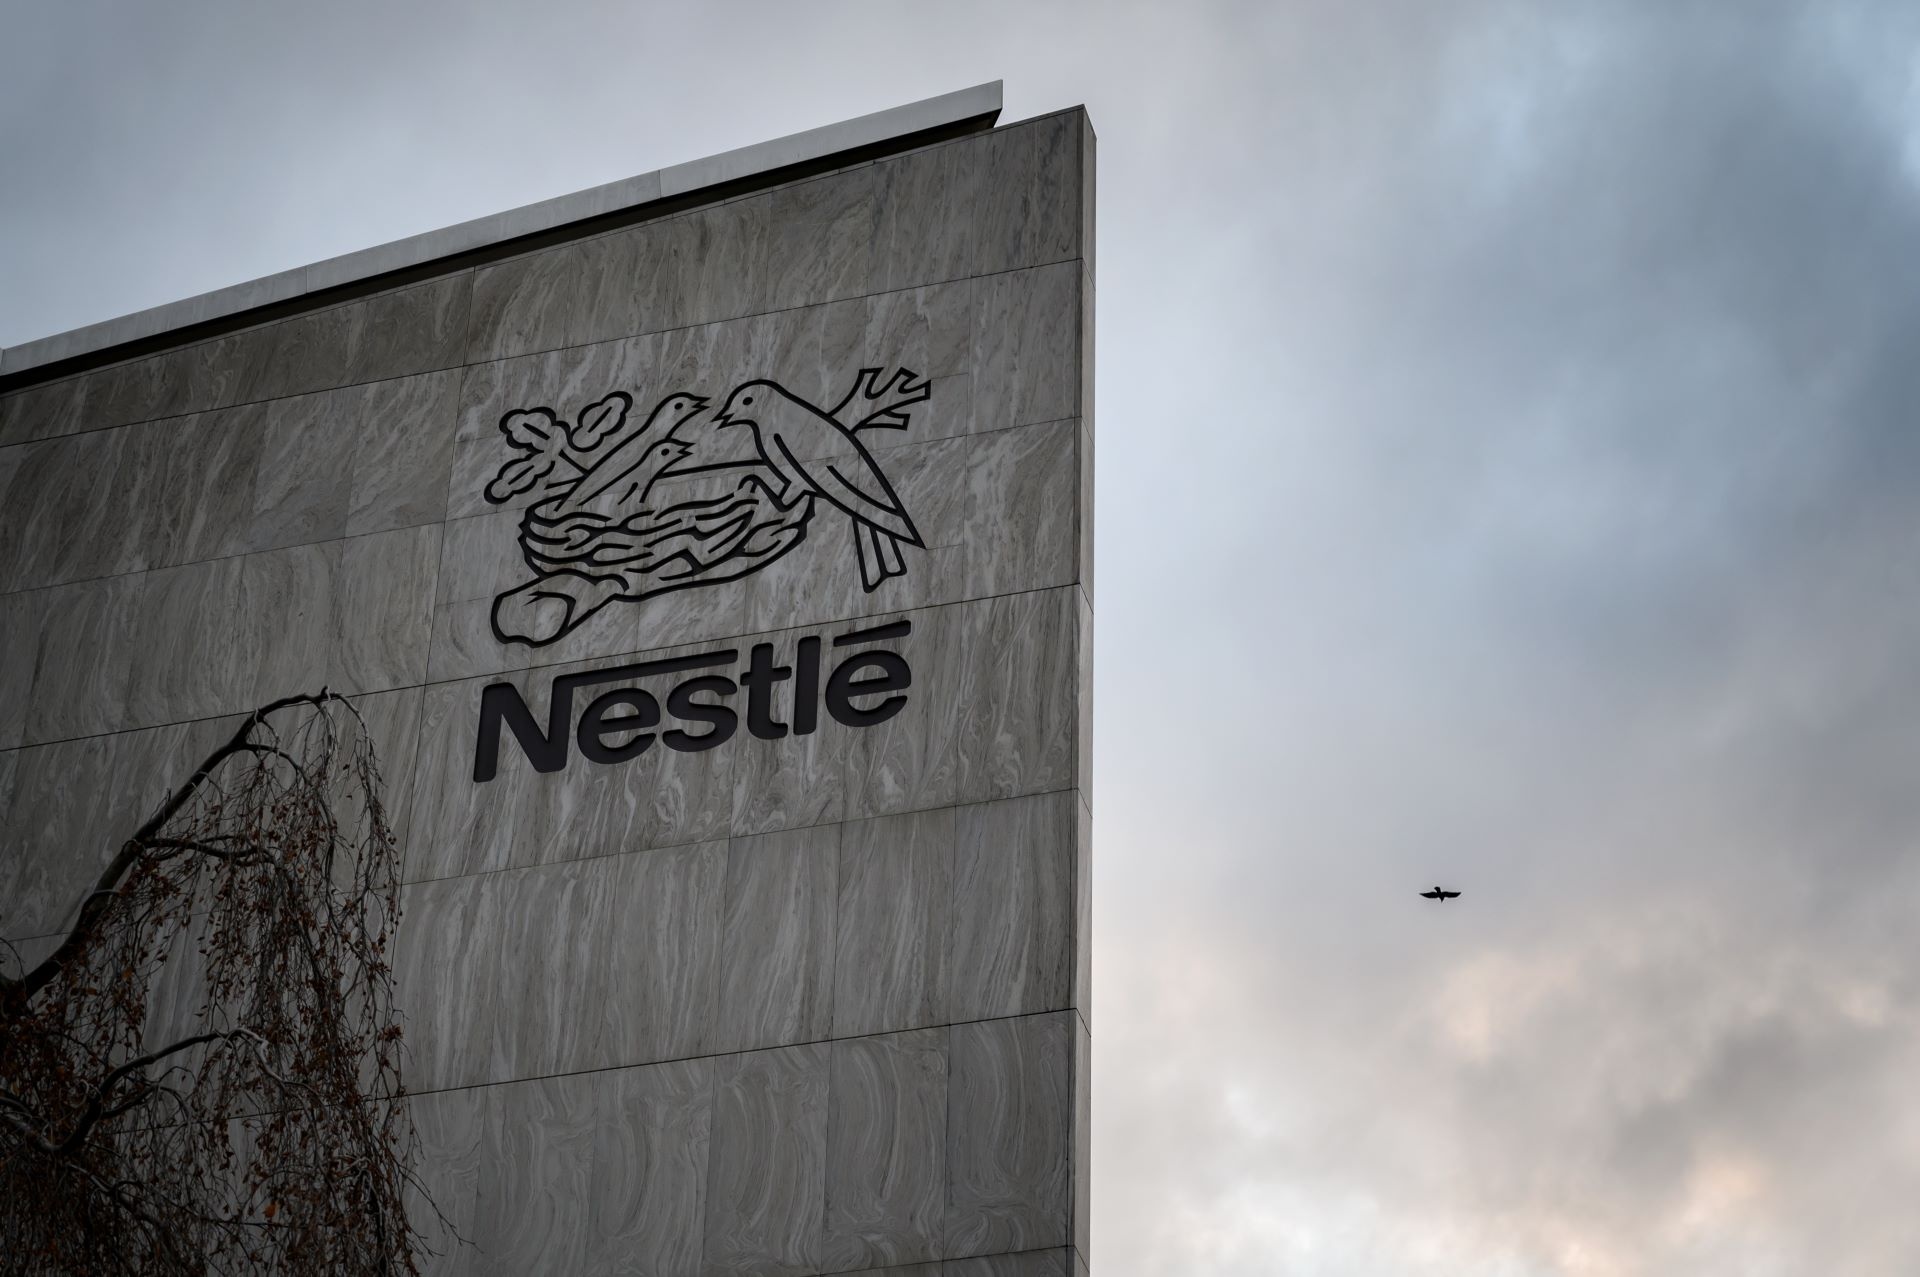 Nestlé Corn Flakes photo draws backlash on social media